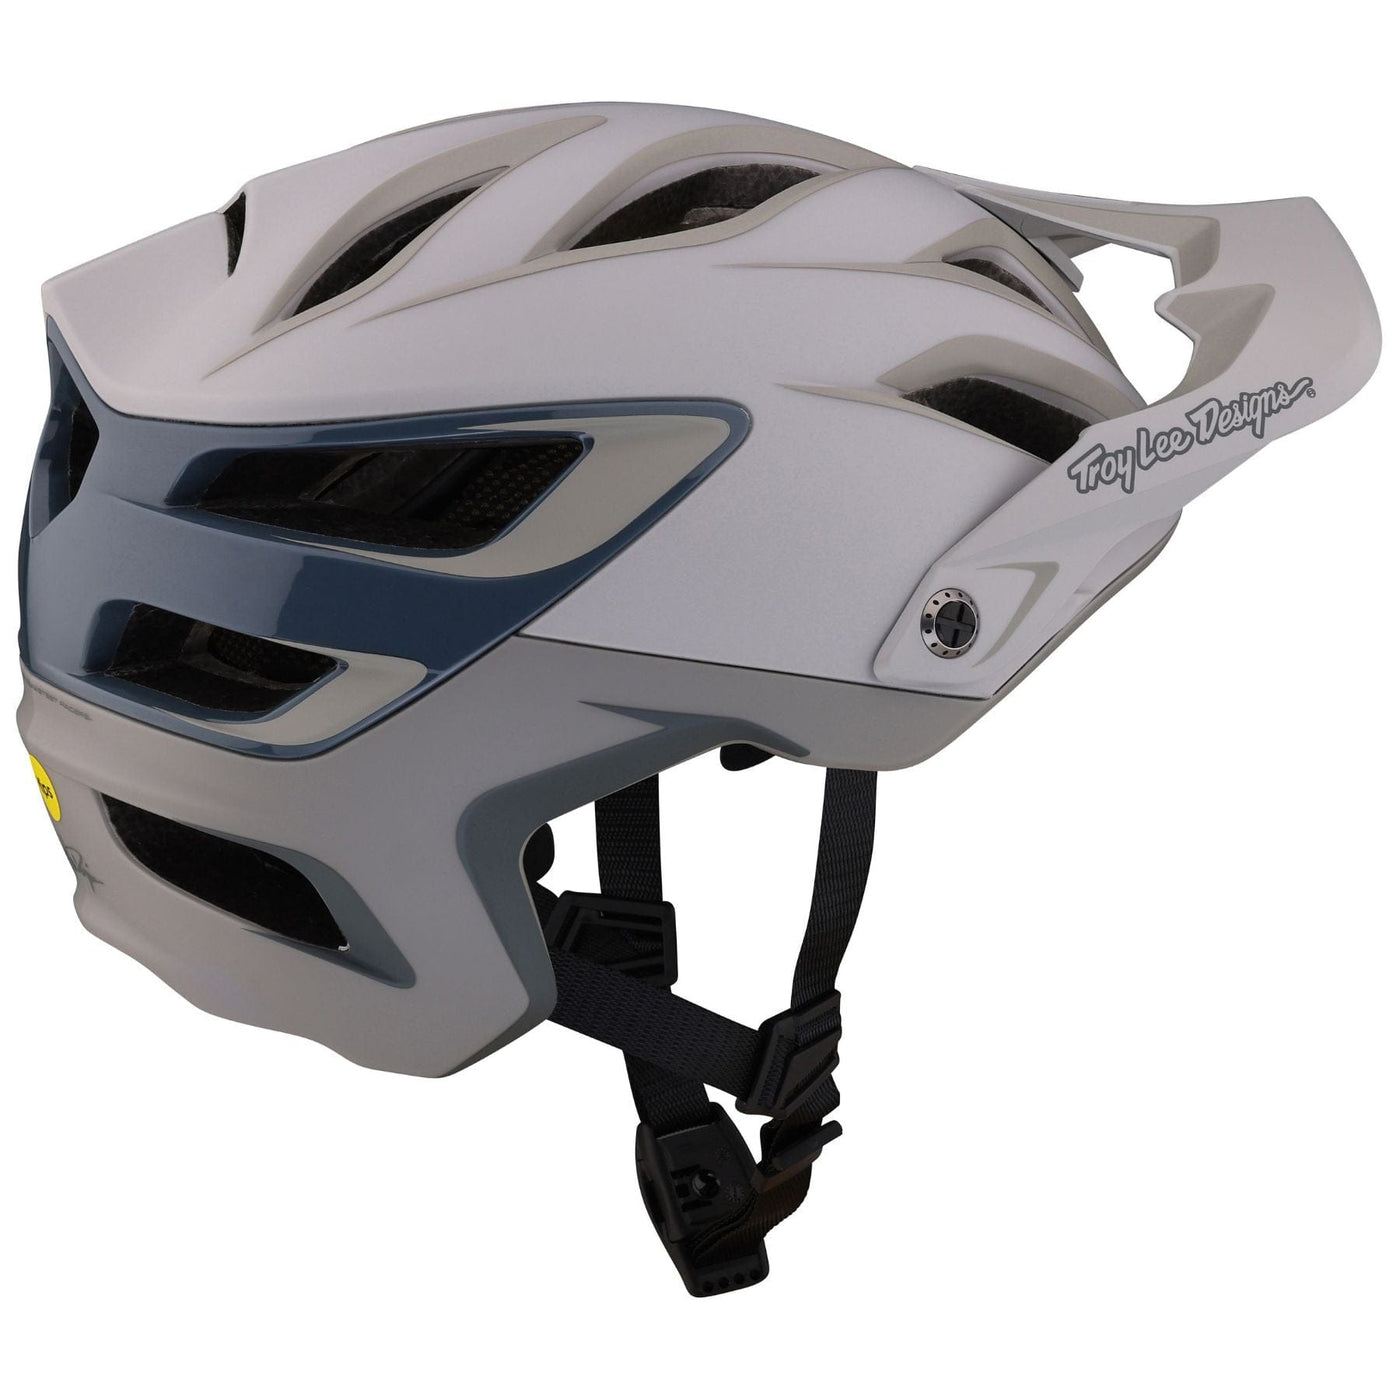 Troy Lee Designs A3 cycling helmet. 